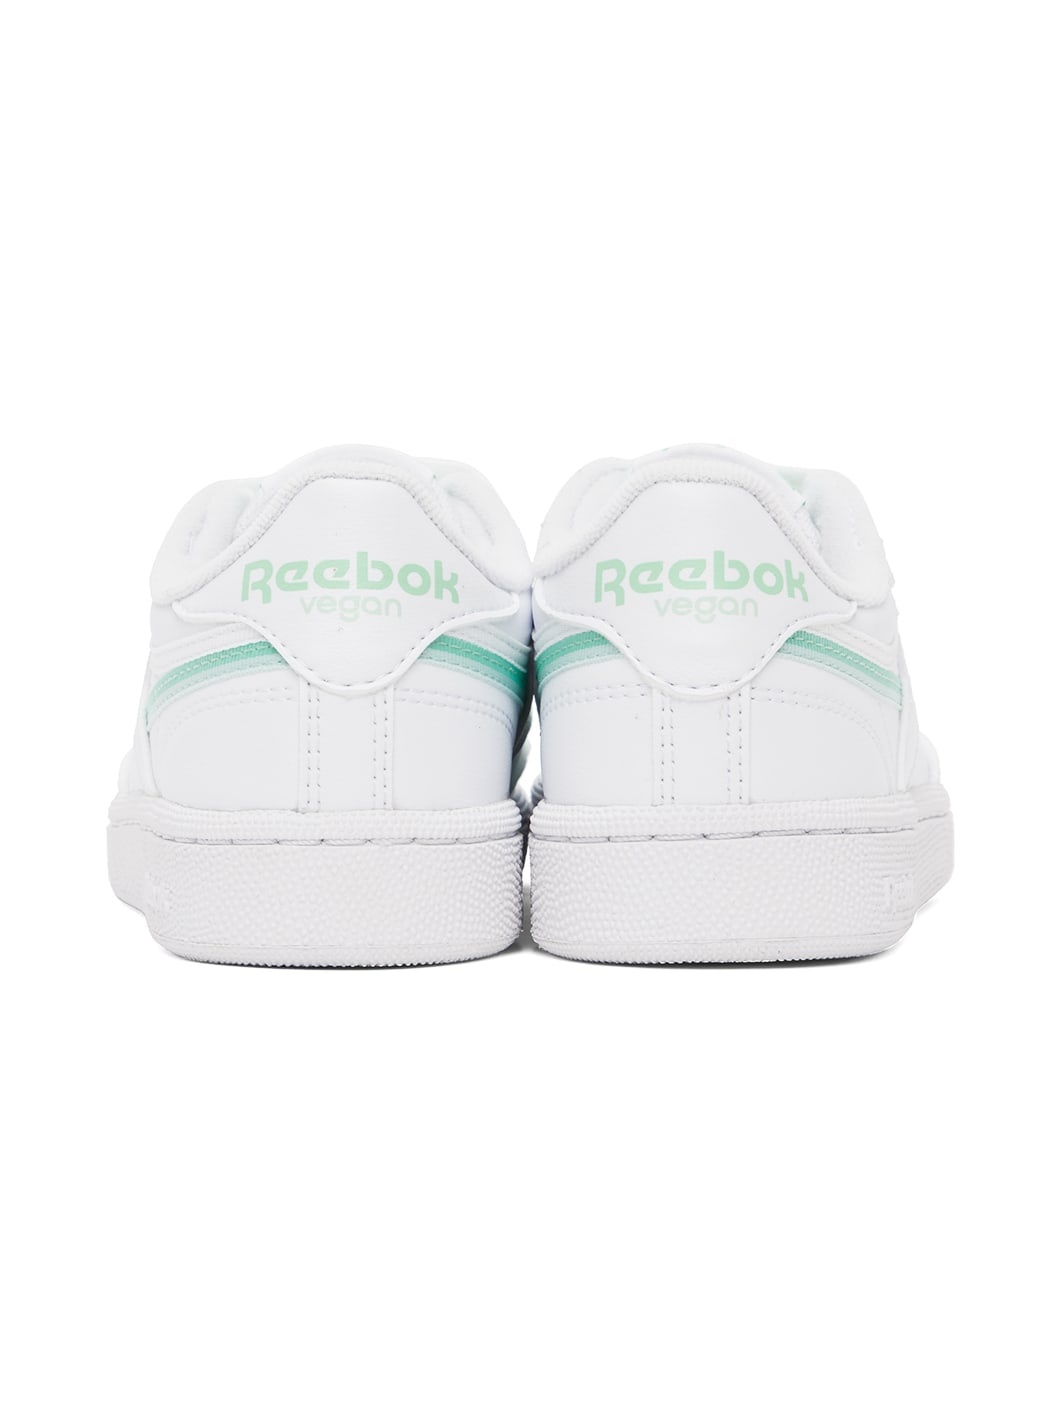 White & Green Club C 85 Vegan Sneakers - 2